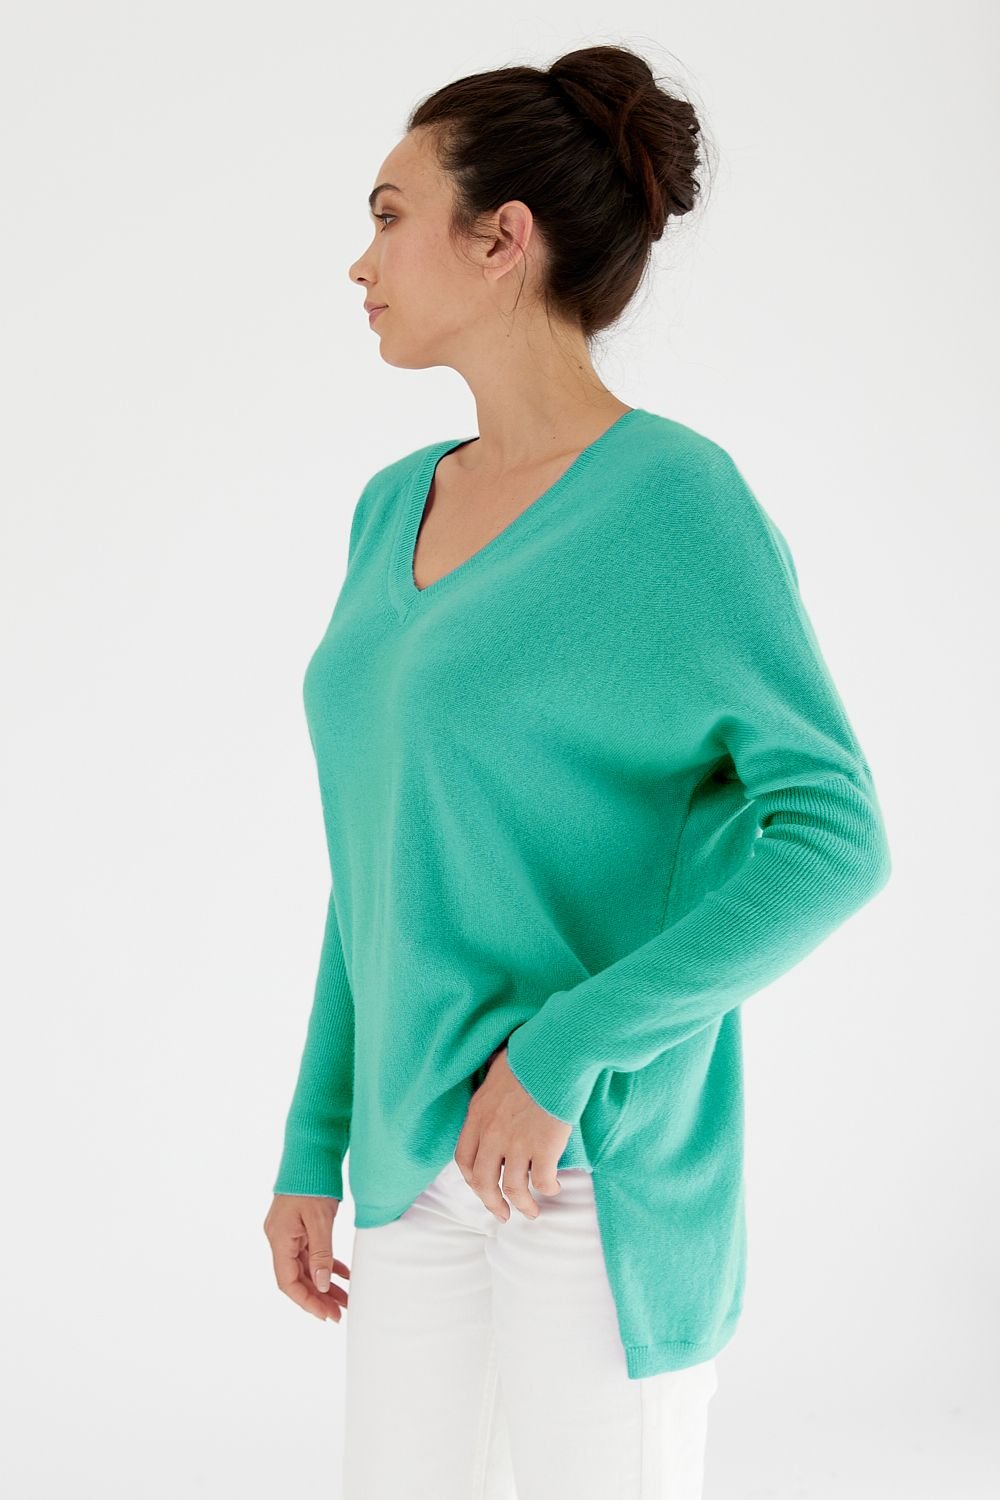 Shop V-Neck Boyfriend Sweater │ Turquoise - Mia Fratino